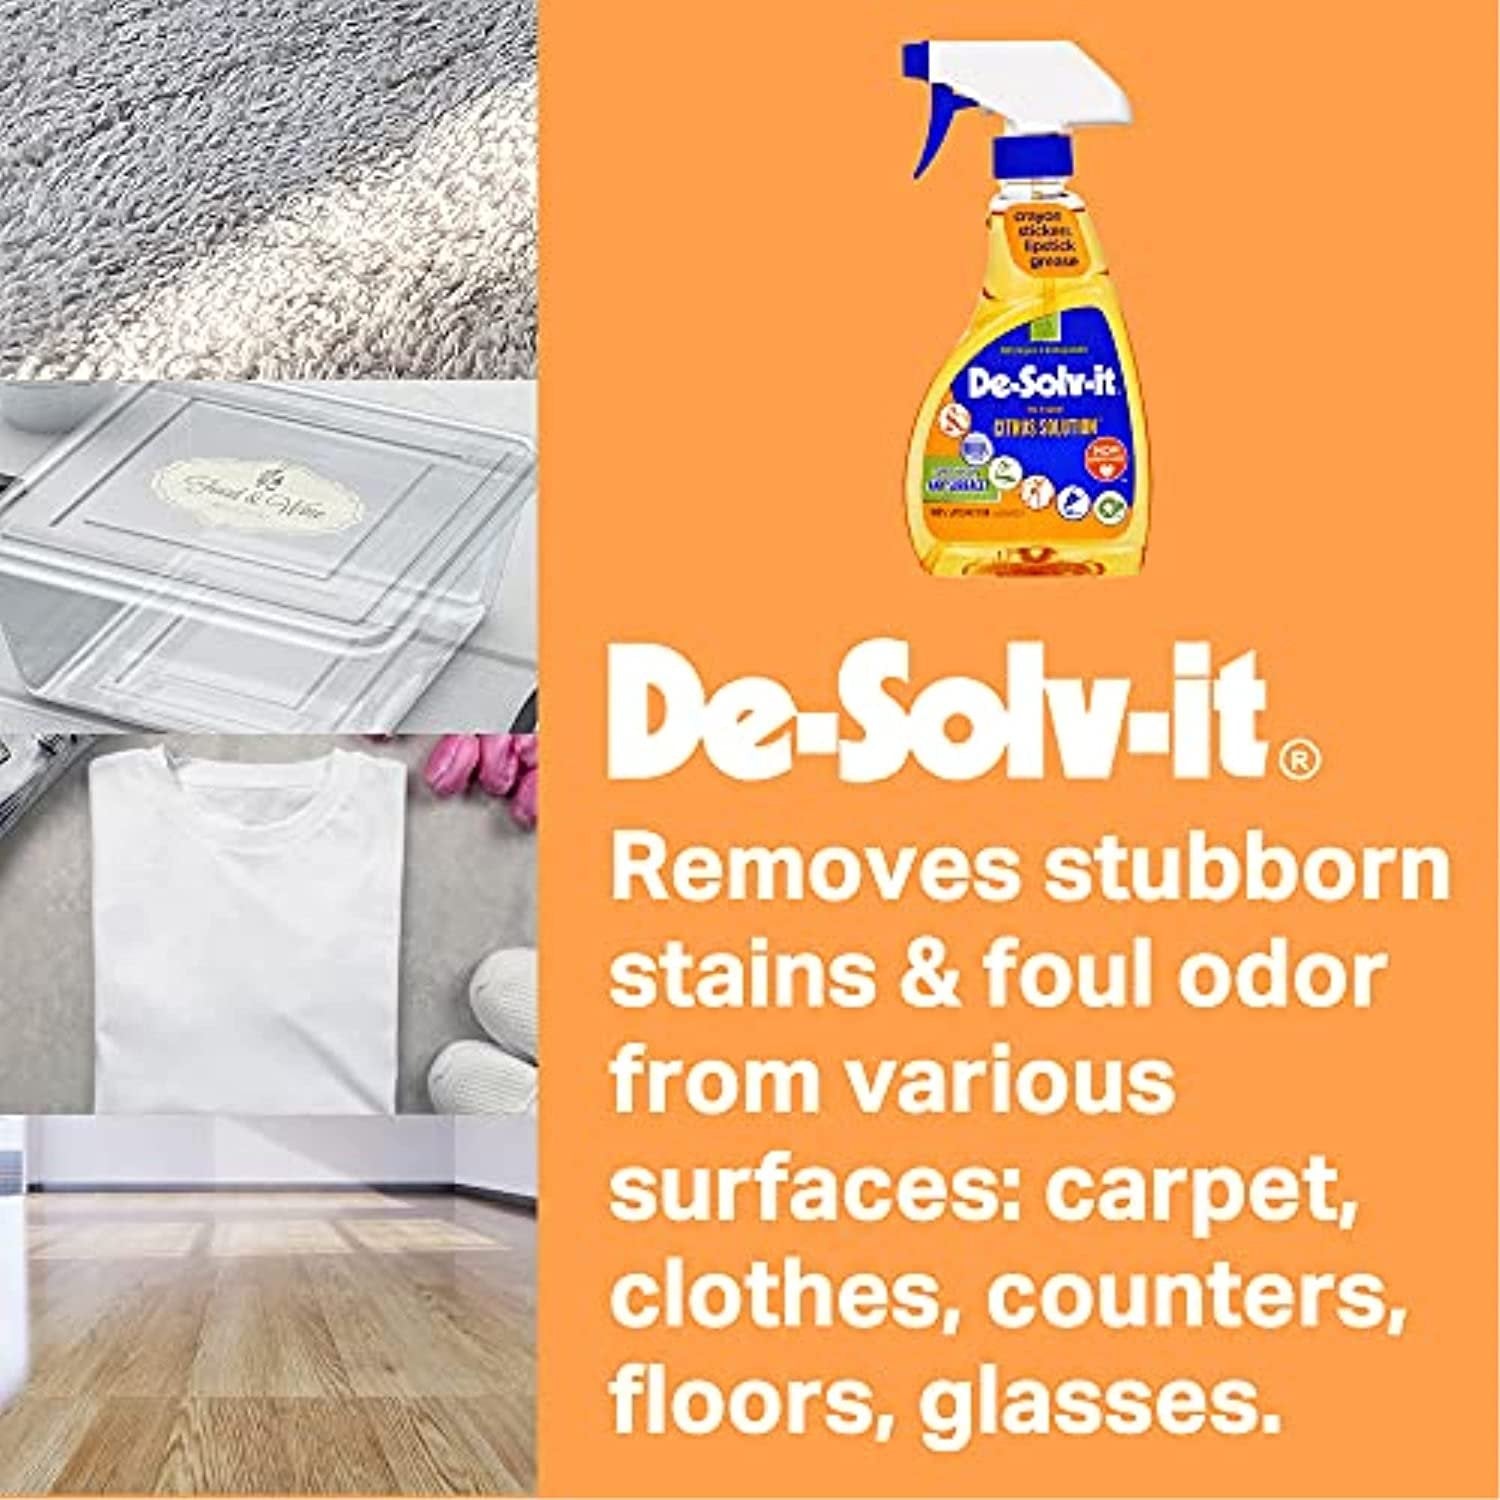 Orange Sol De-Solv-It Citrus Solution - Odor & Stain Remover for Cloth, Wood, Glass & More, 32-Ounce